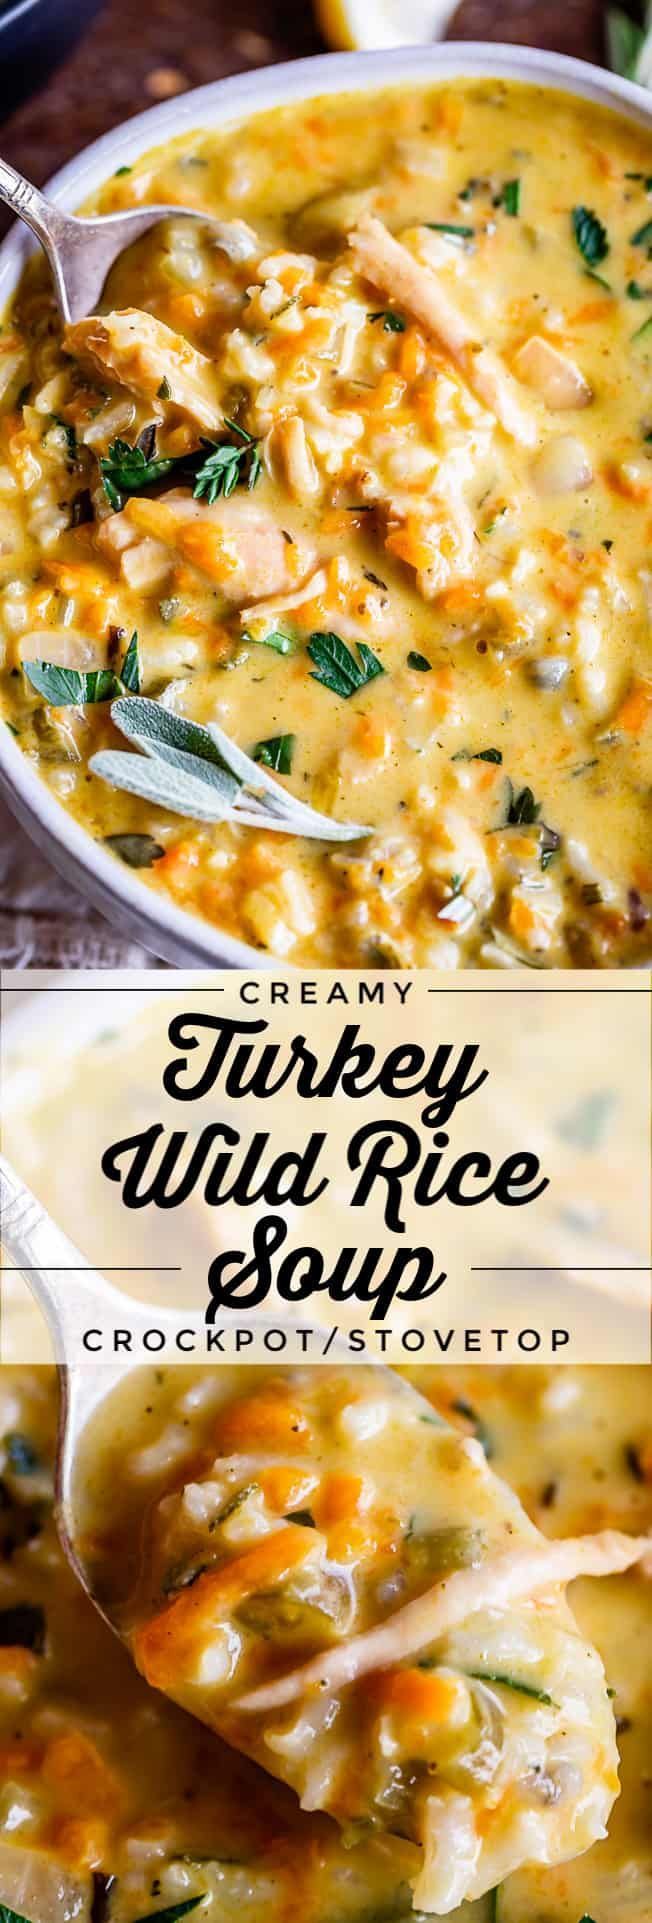 Creamy Turkey Wild Rice Soup recipe from The Food Charlatan -   19 leftover turkey recipes healthy soup ideas